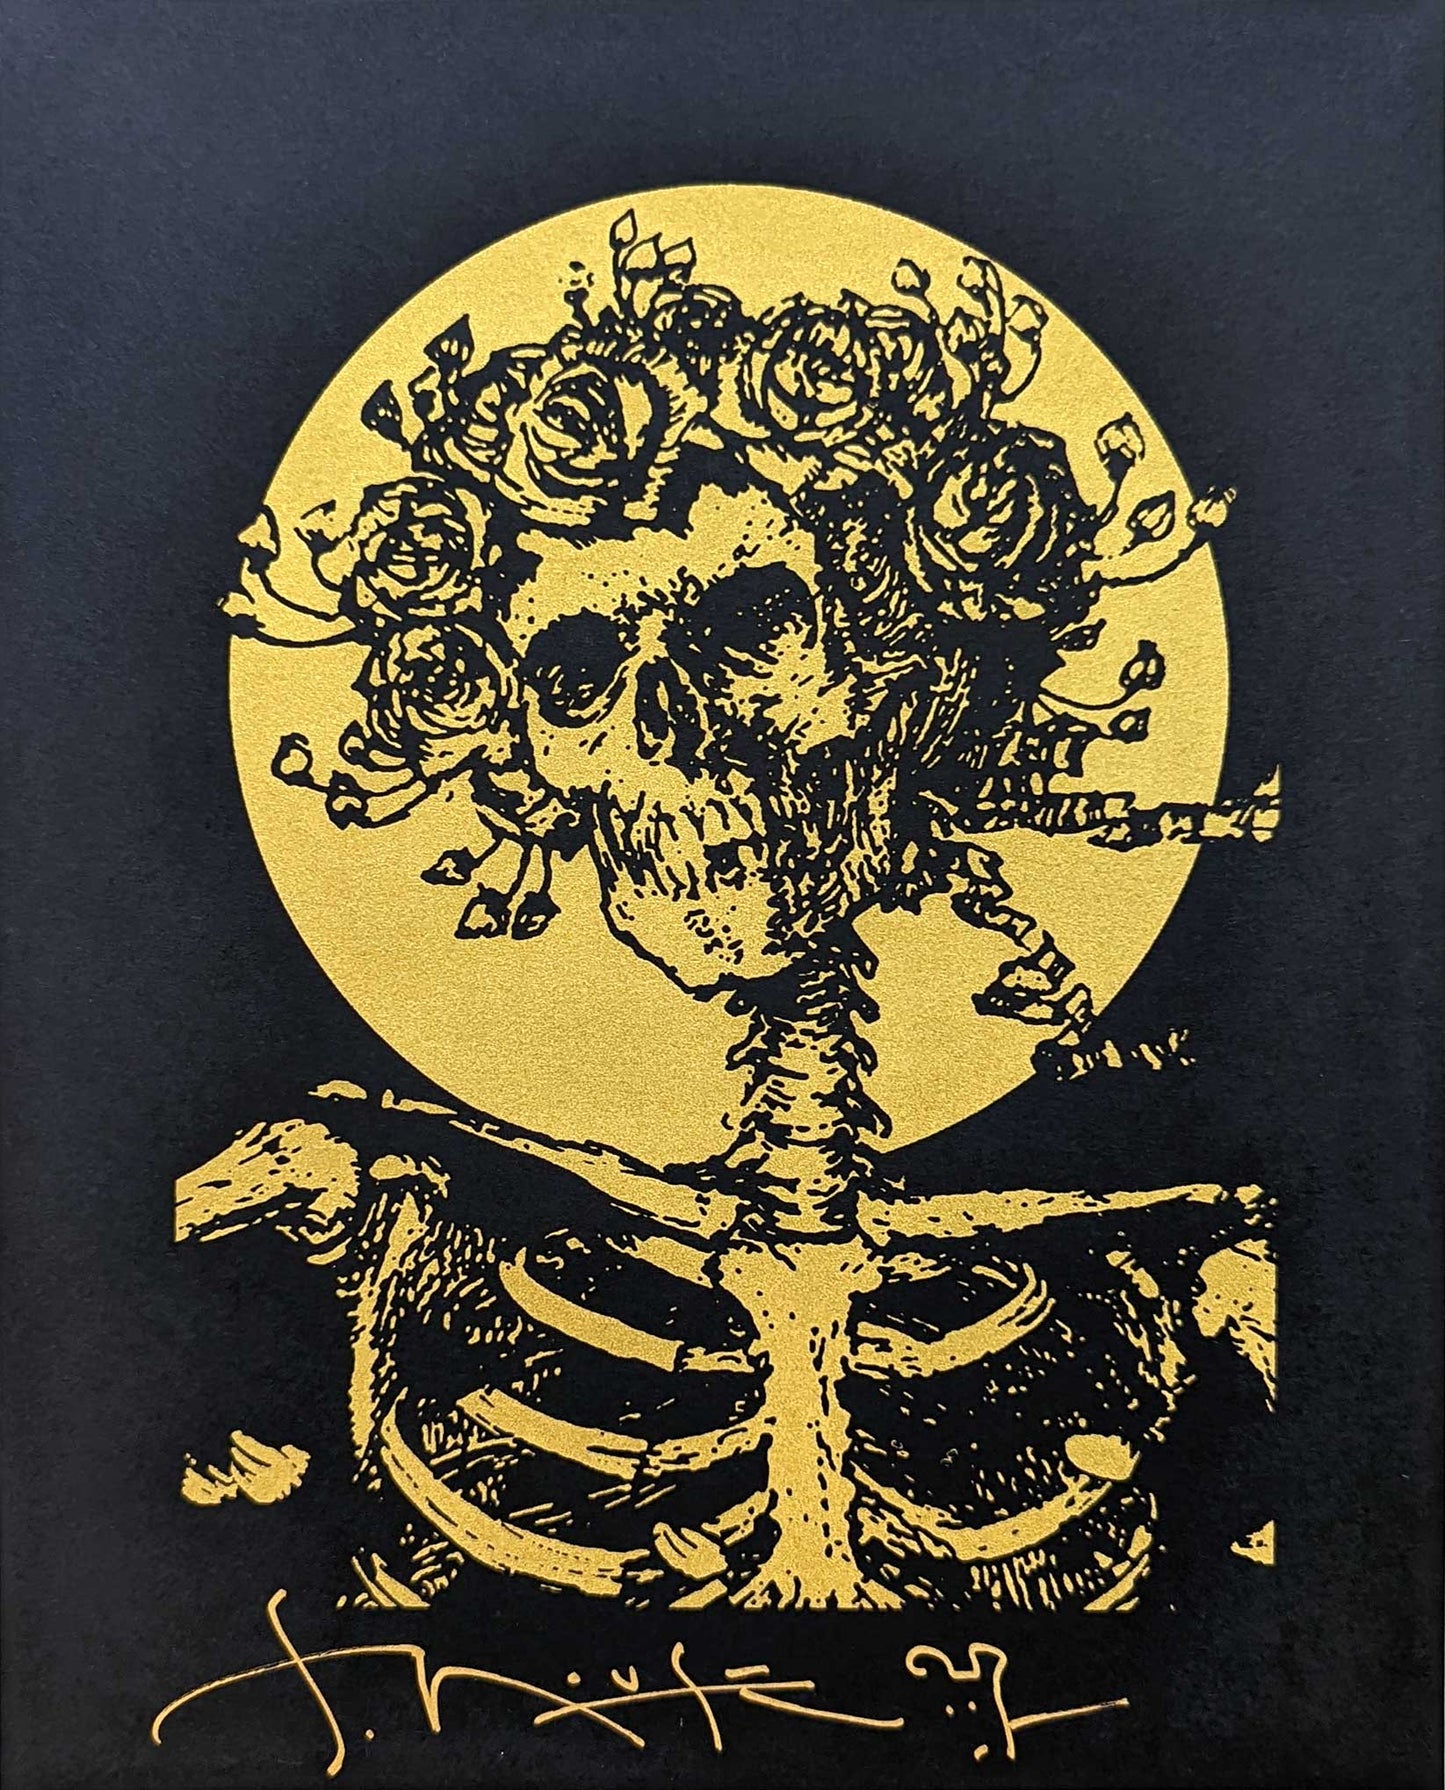 Skeleton & Roses Handbill by Stanley Mouse